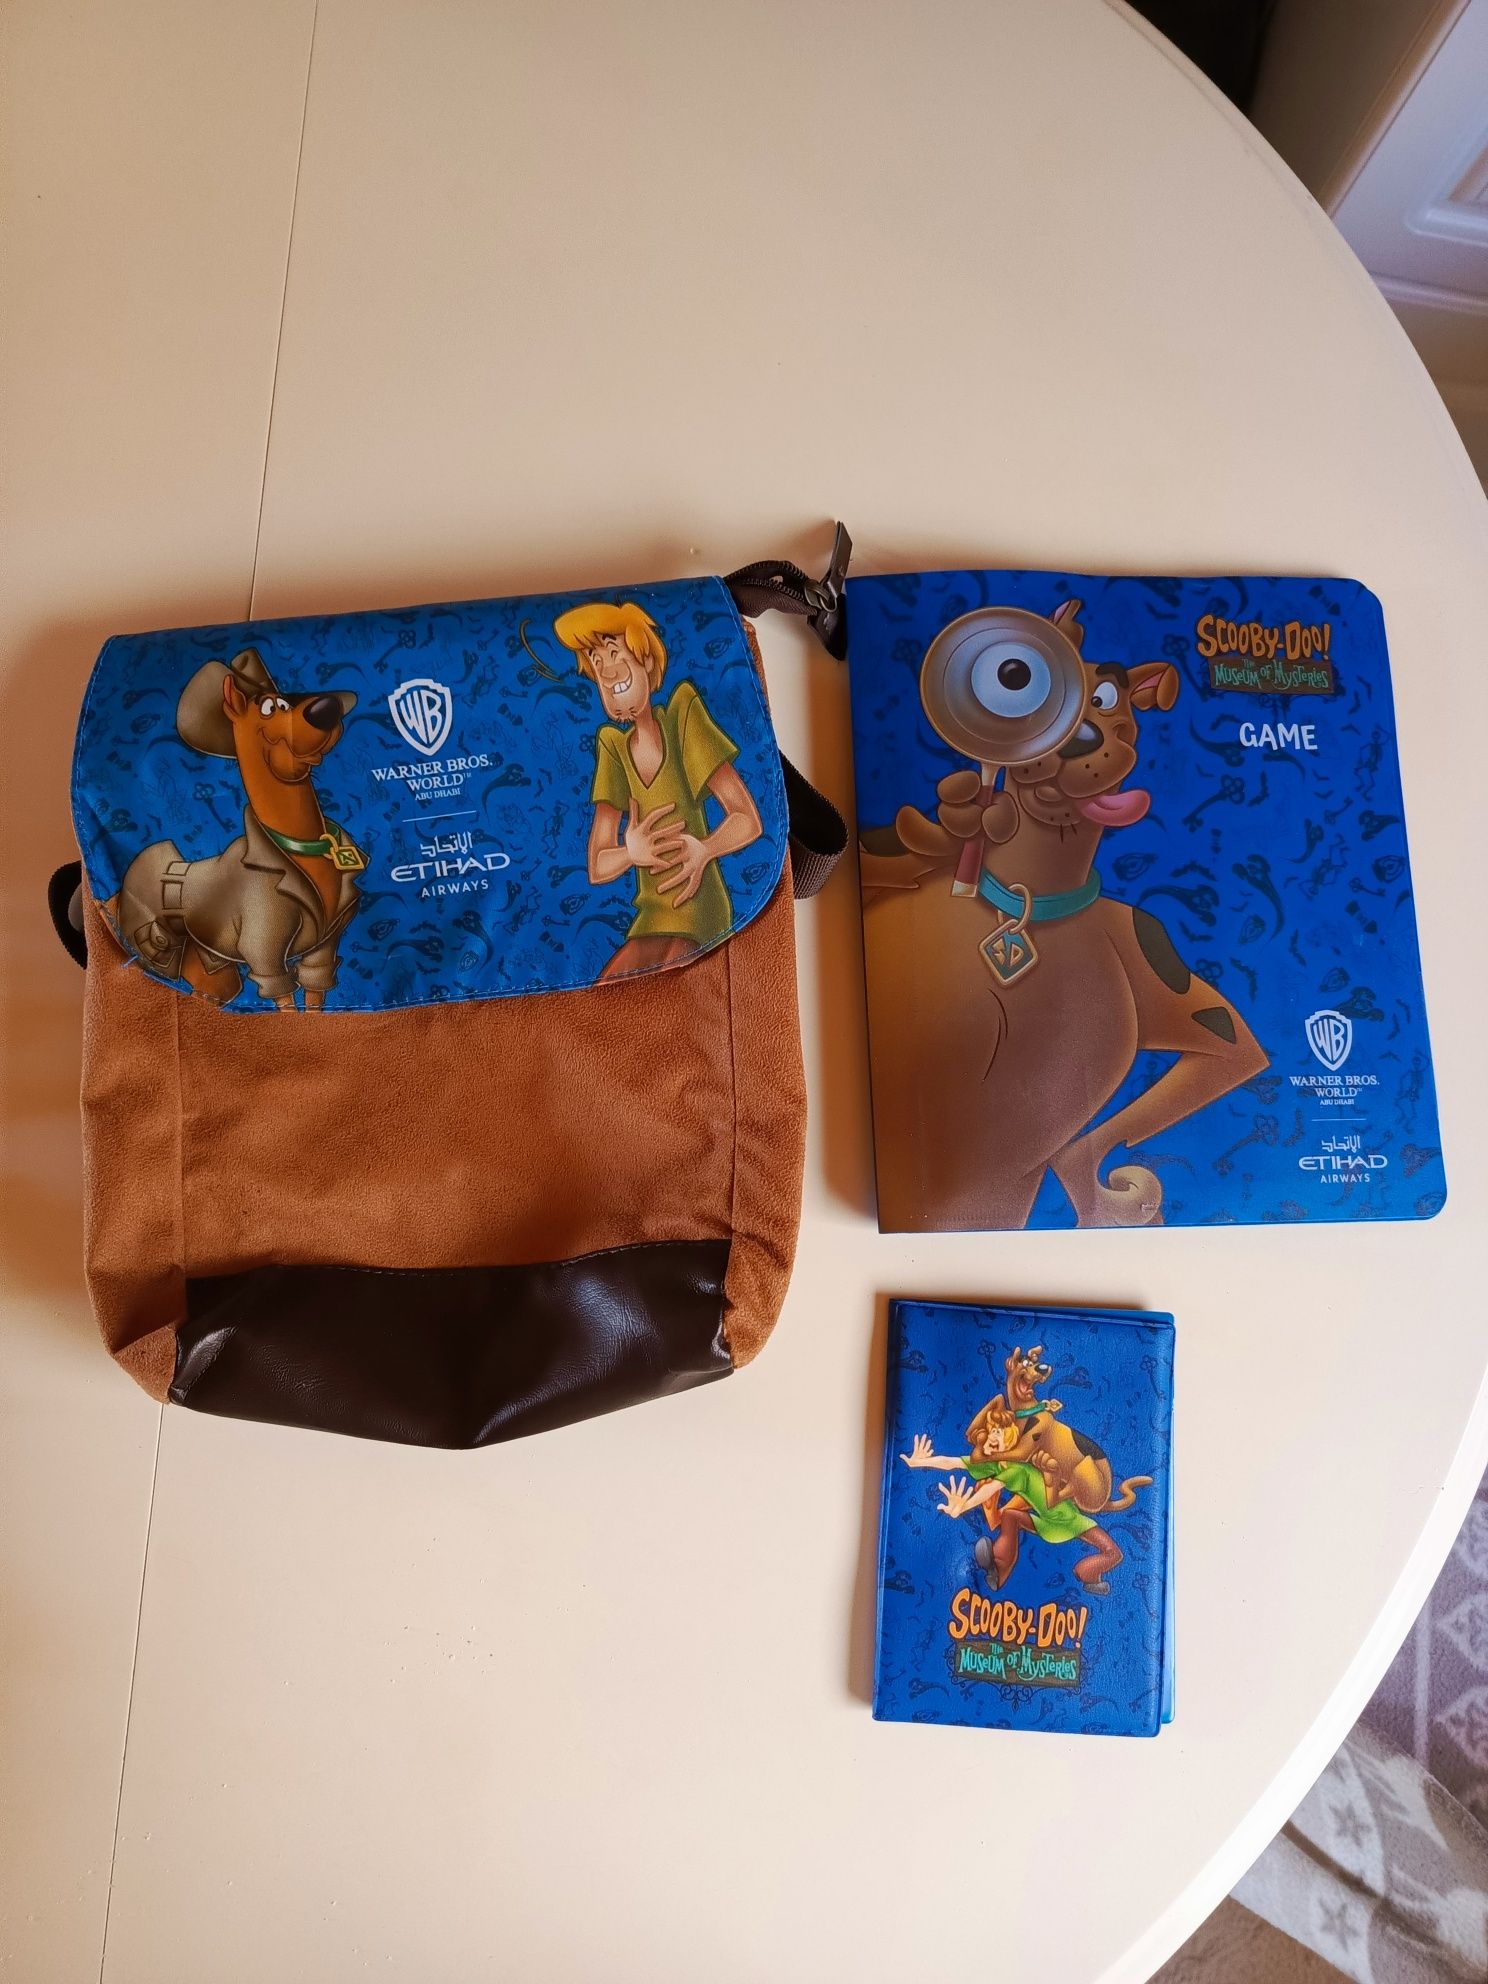 Plecak skórzany regulowany Scooby-Doo Warner Bros Etihad Airways

mumk